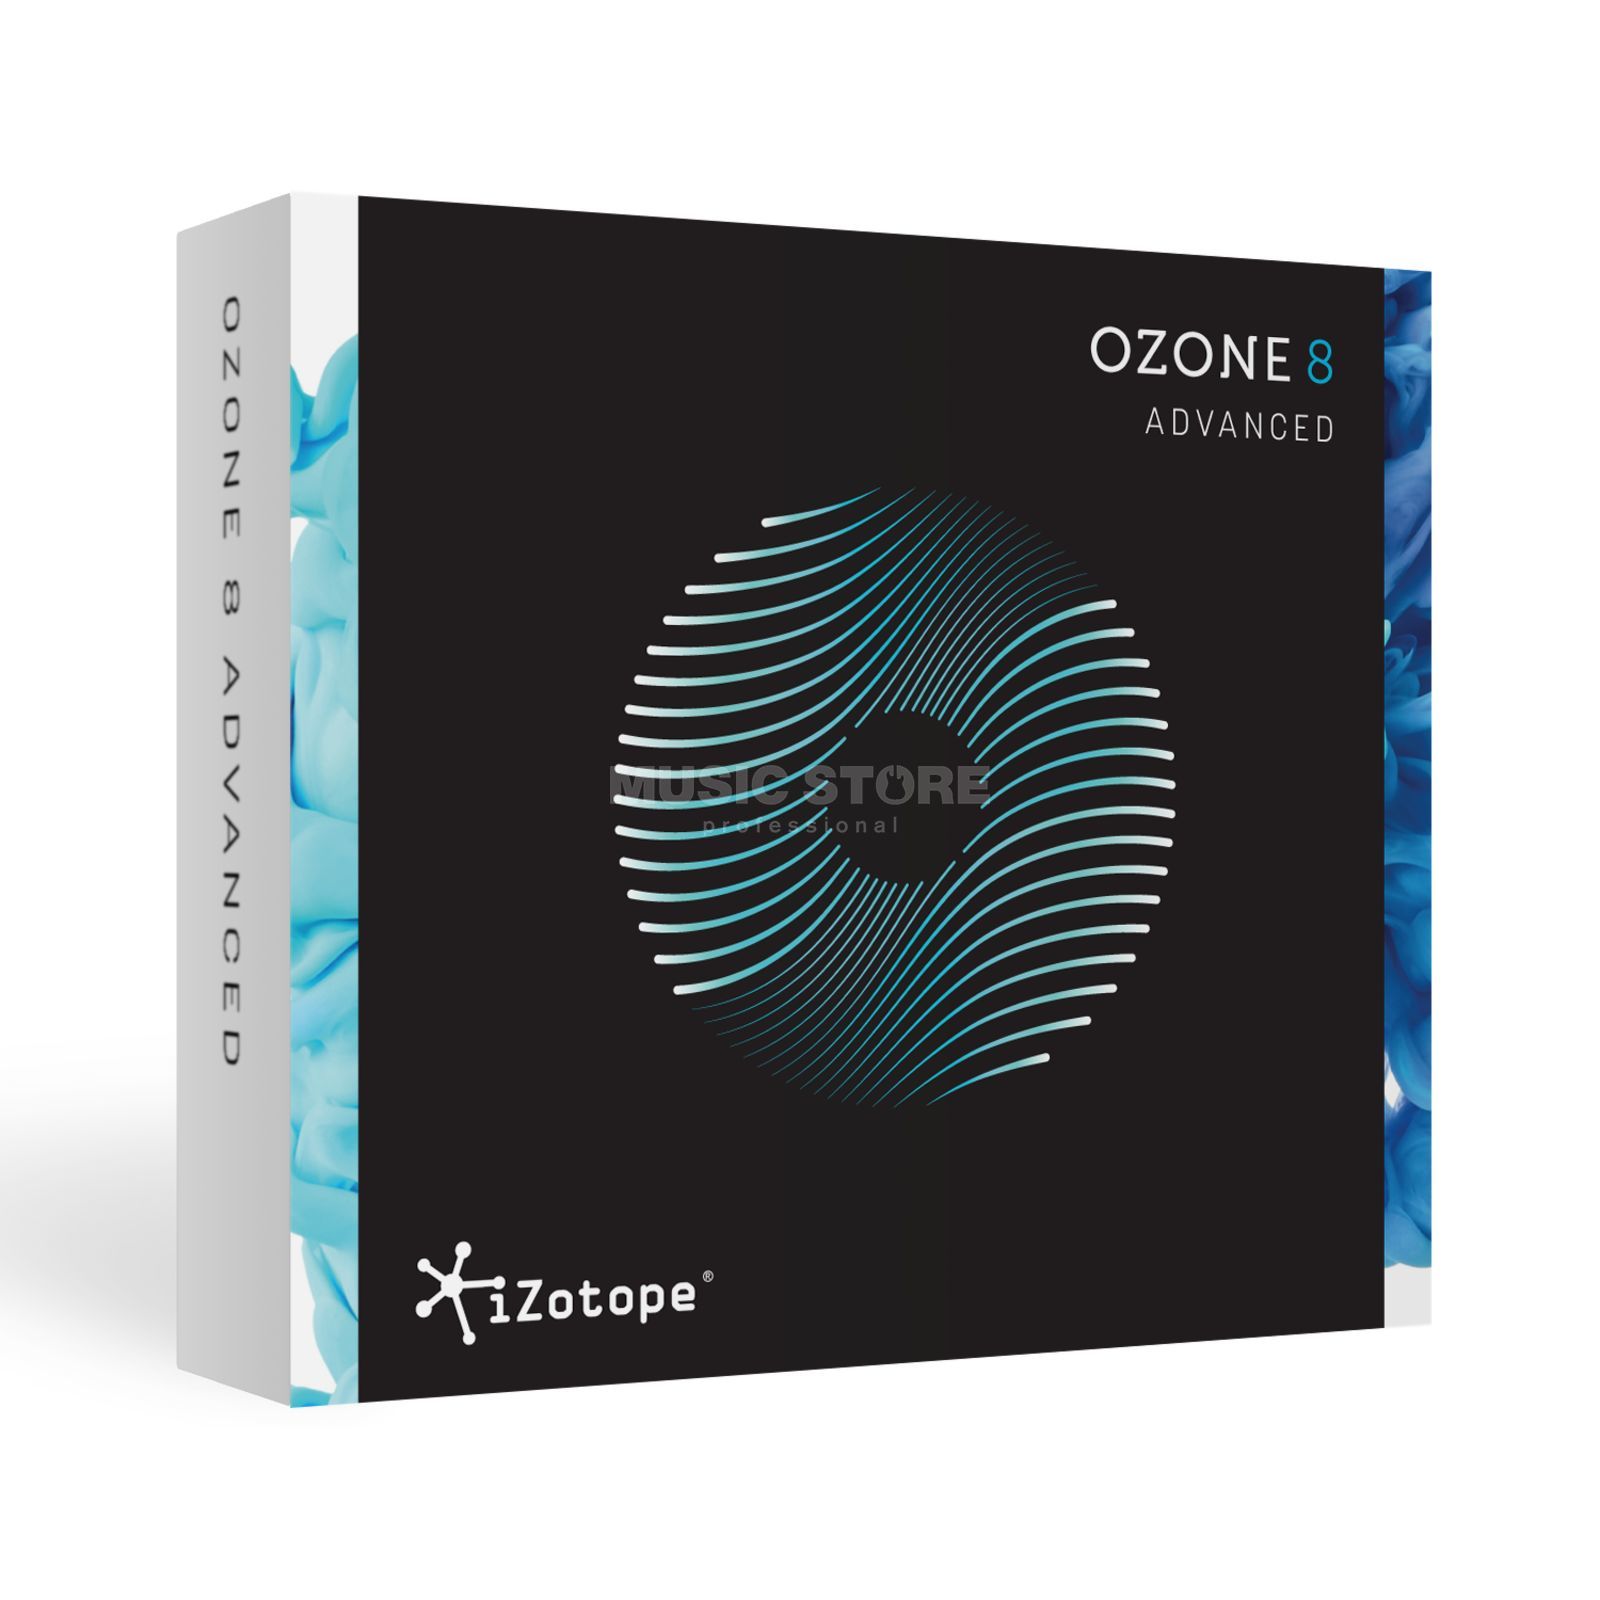 Izotope ozone 8 download full version crack 64-bit